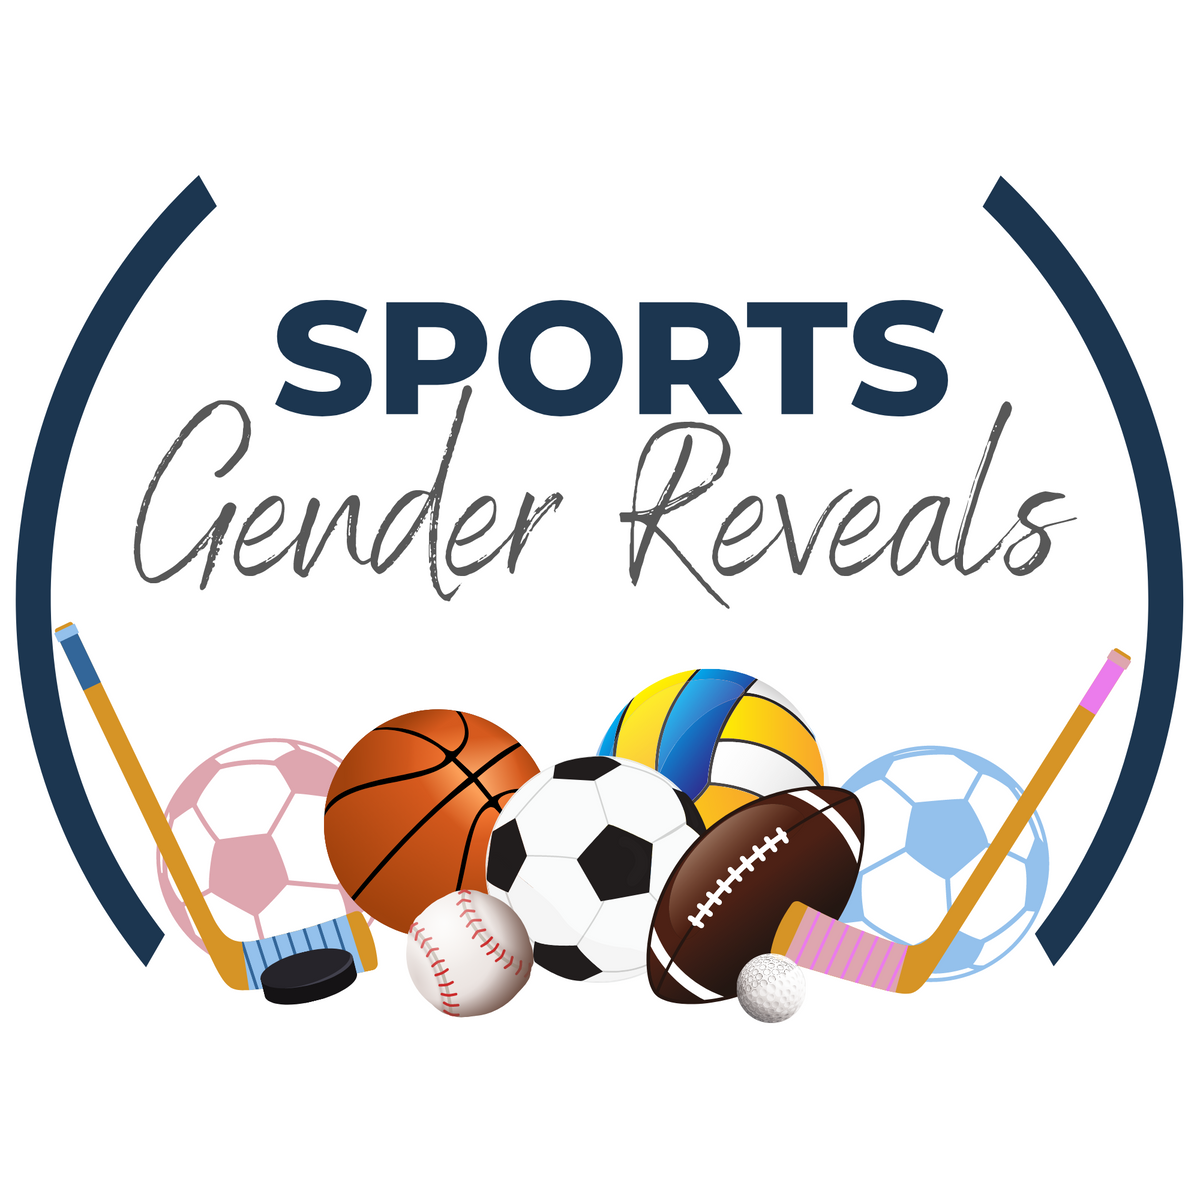 Sports Themed Gender Reveal Ideas – Gender Reveal Co